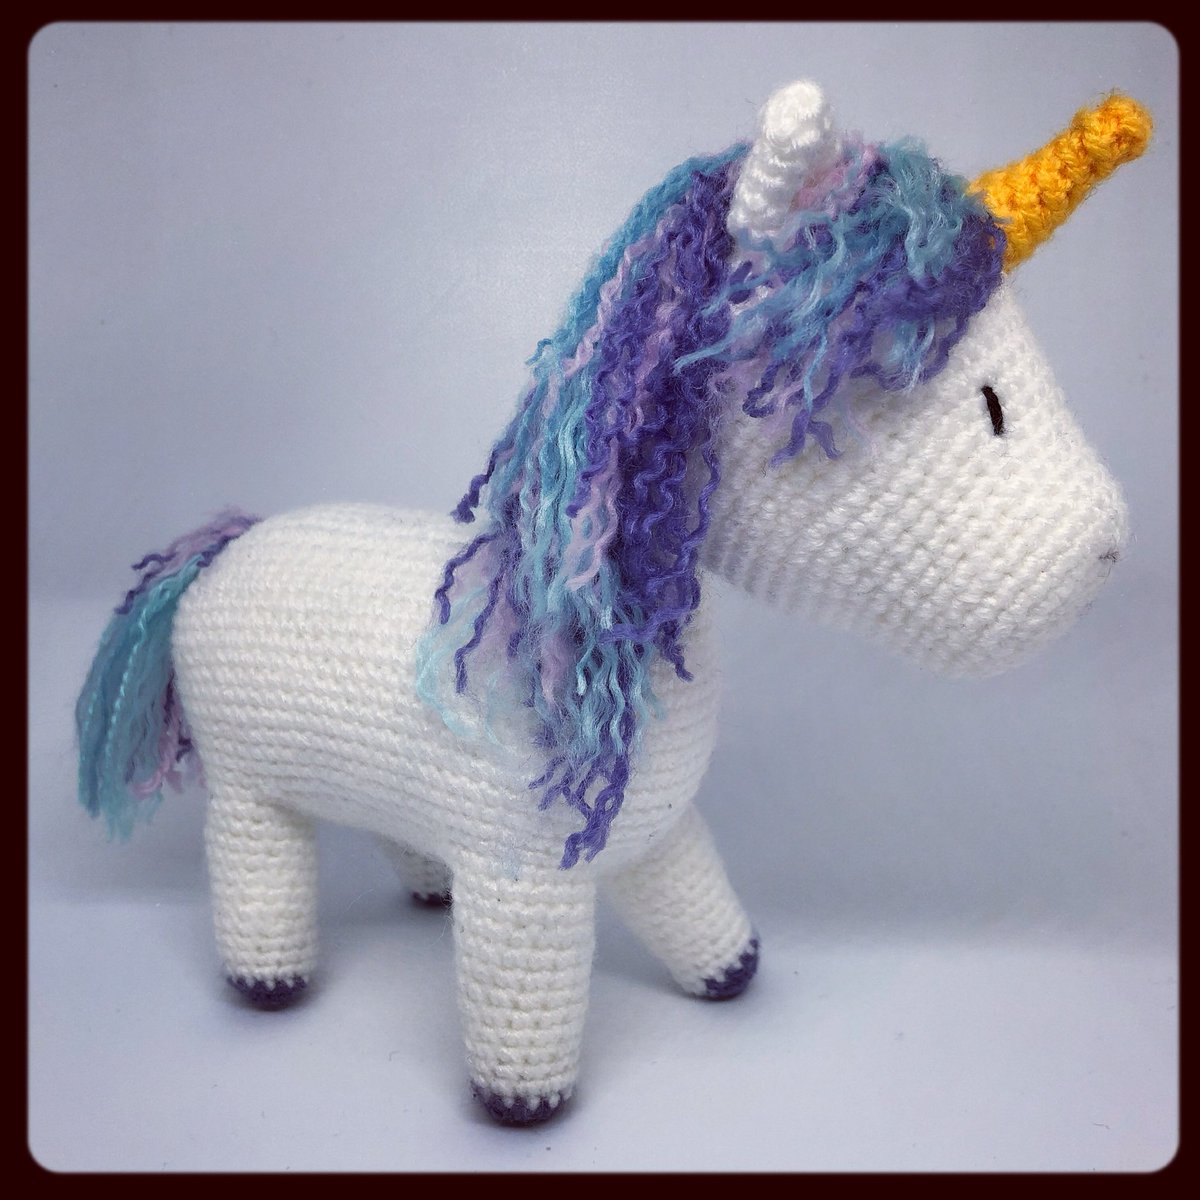 Be a #unicorn #unicorncrochet #amigurumi #crochet 🦄🦄 #crochetersoftwitter #craft #handmade #crochettoy